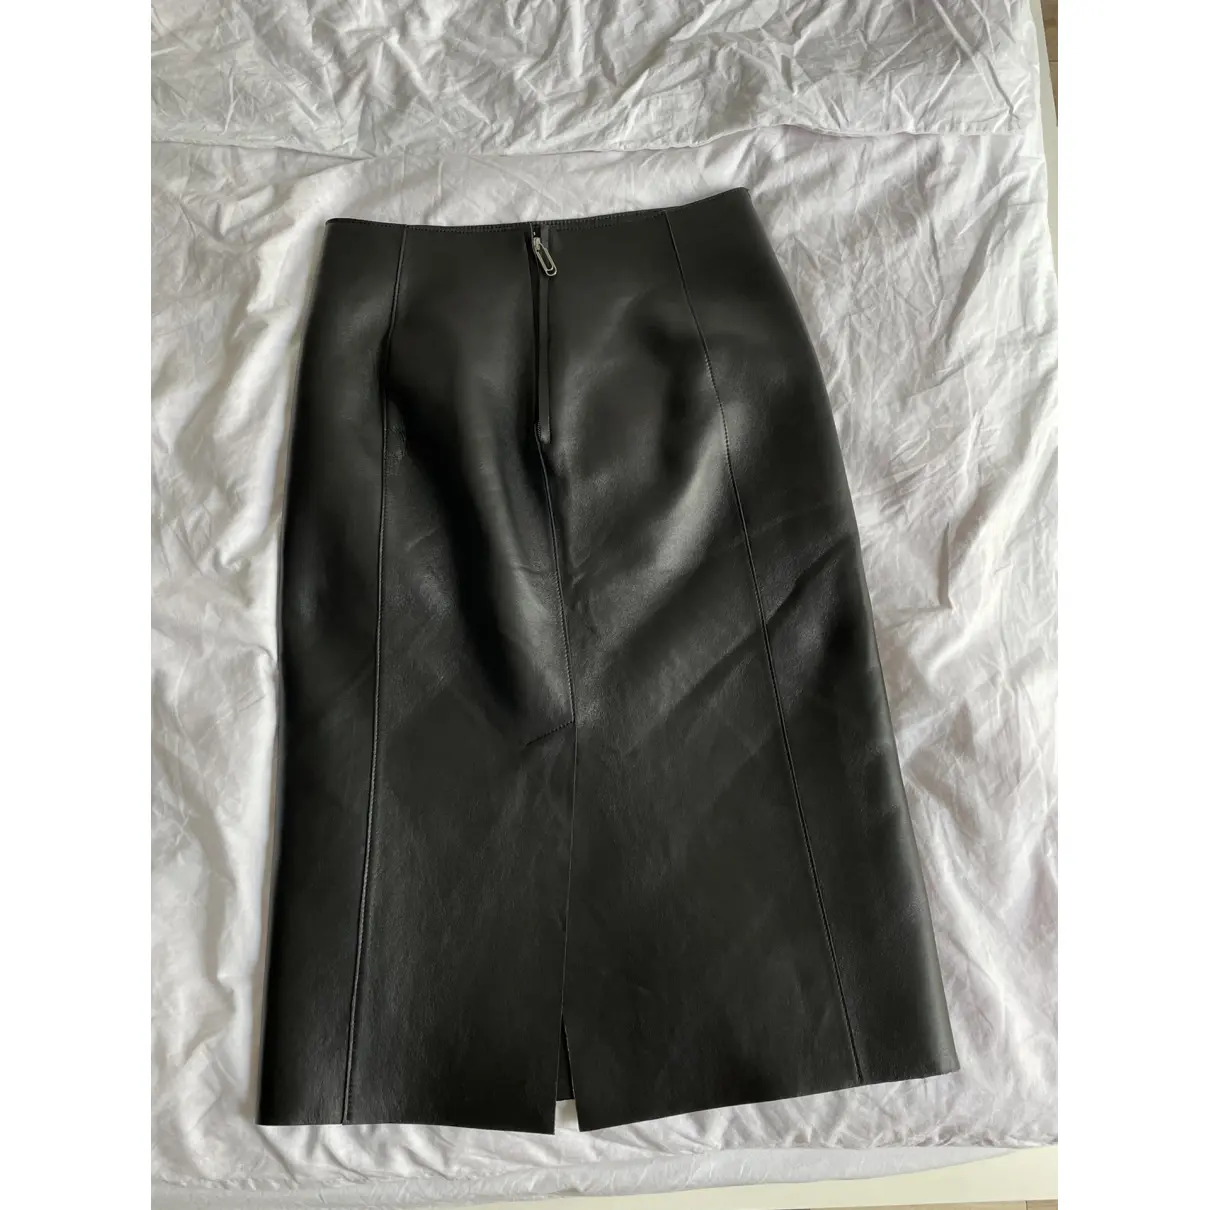 Buy Off-White Leather mid-length skirt online